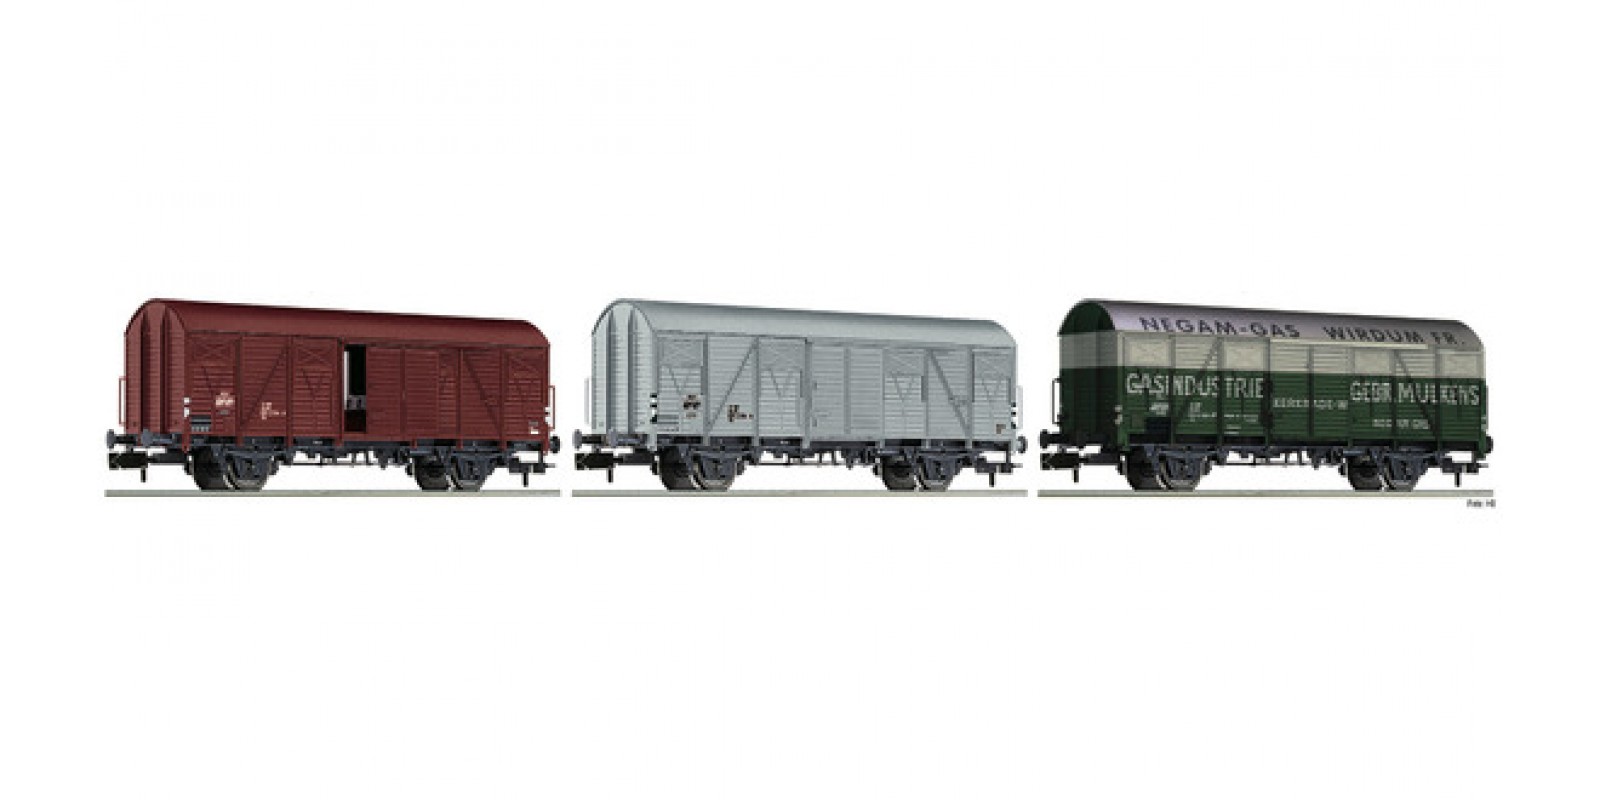 FL831603 - 3 piece set boxcars type Gs, NS